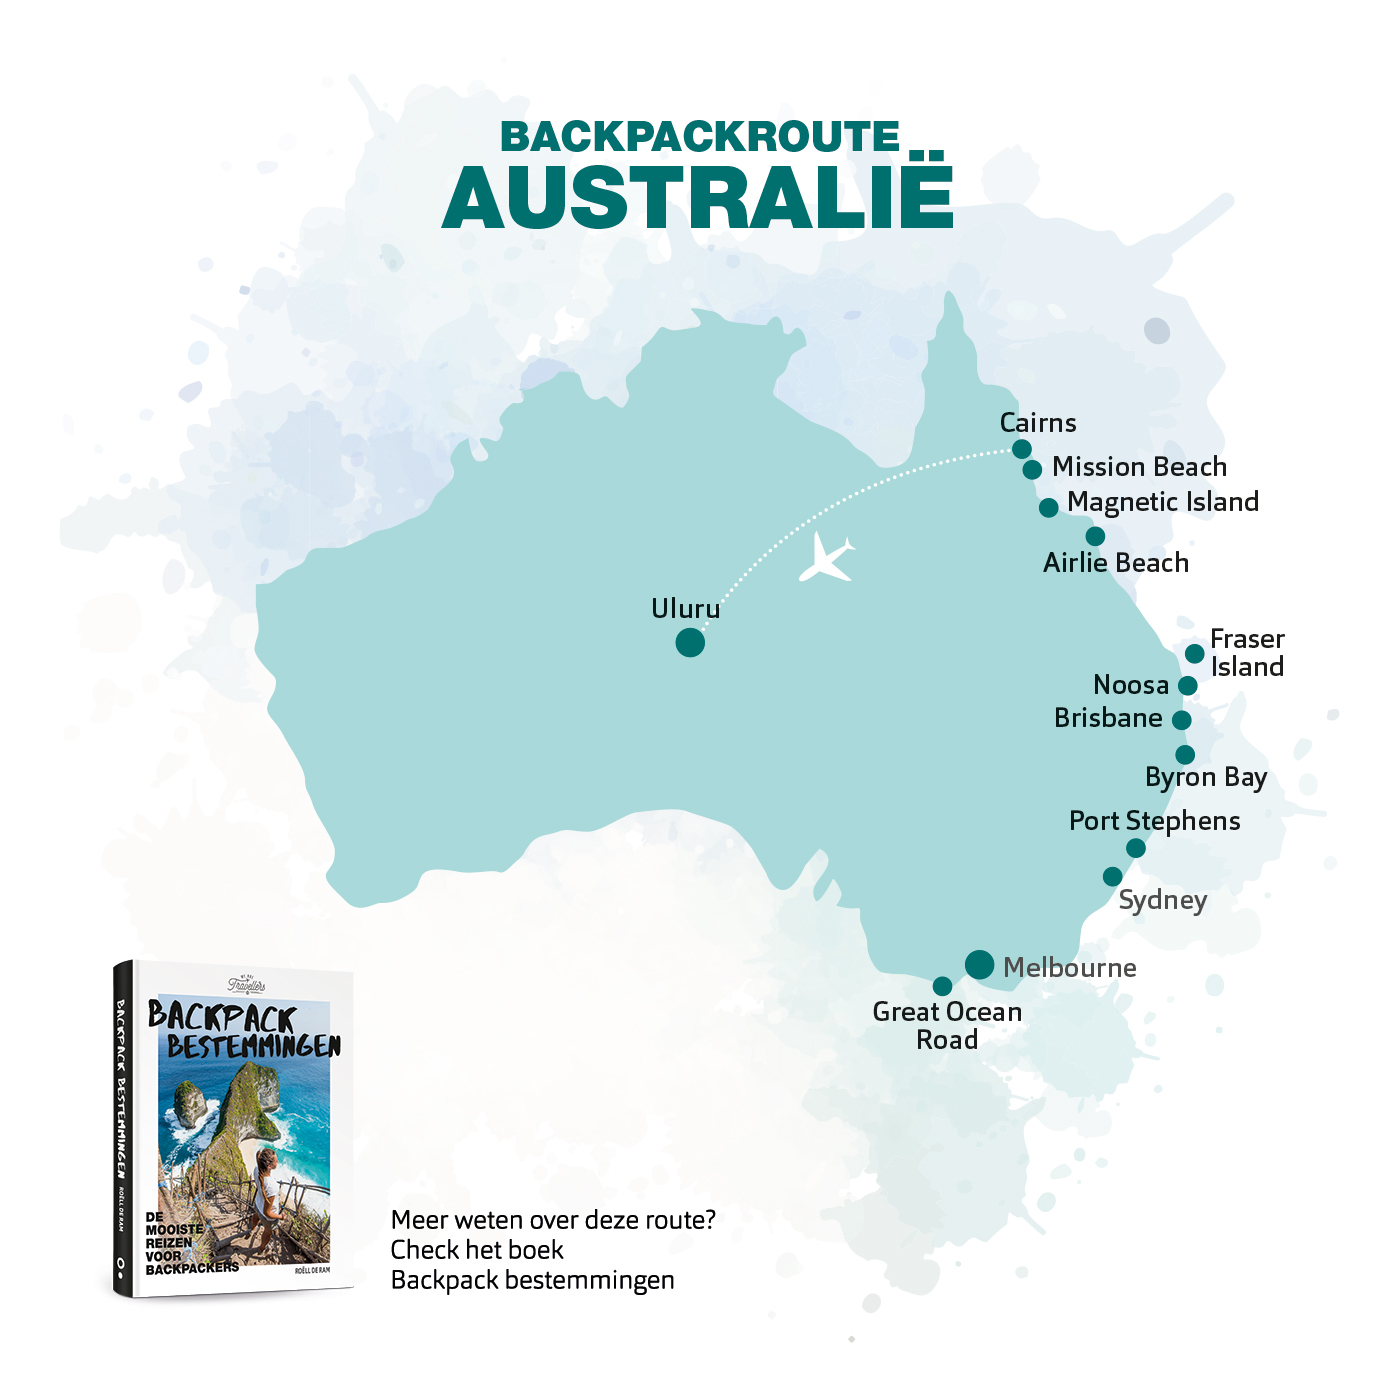 backpack route australie boek backpack bestemmingen